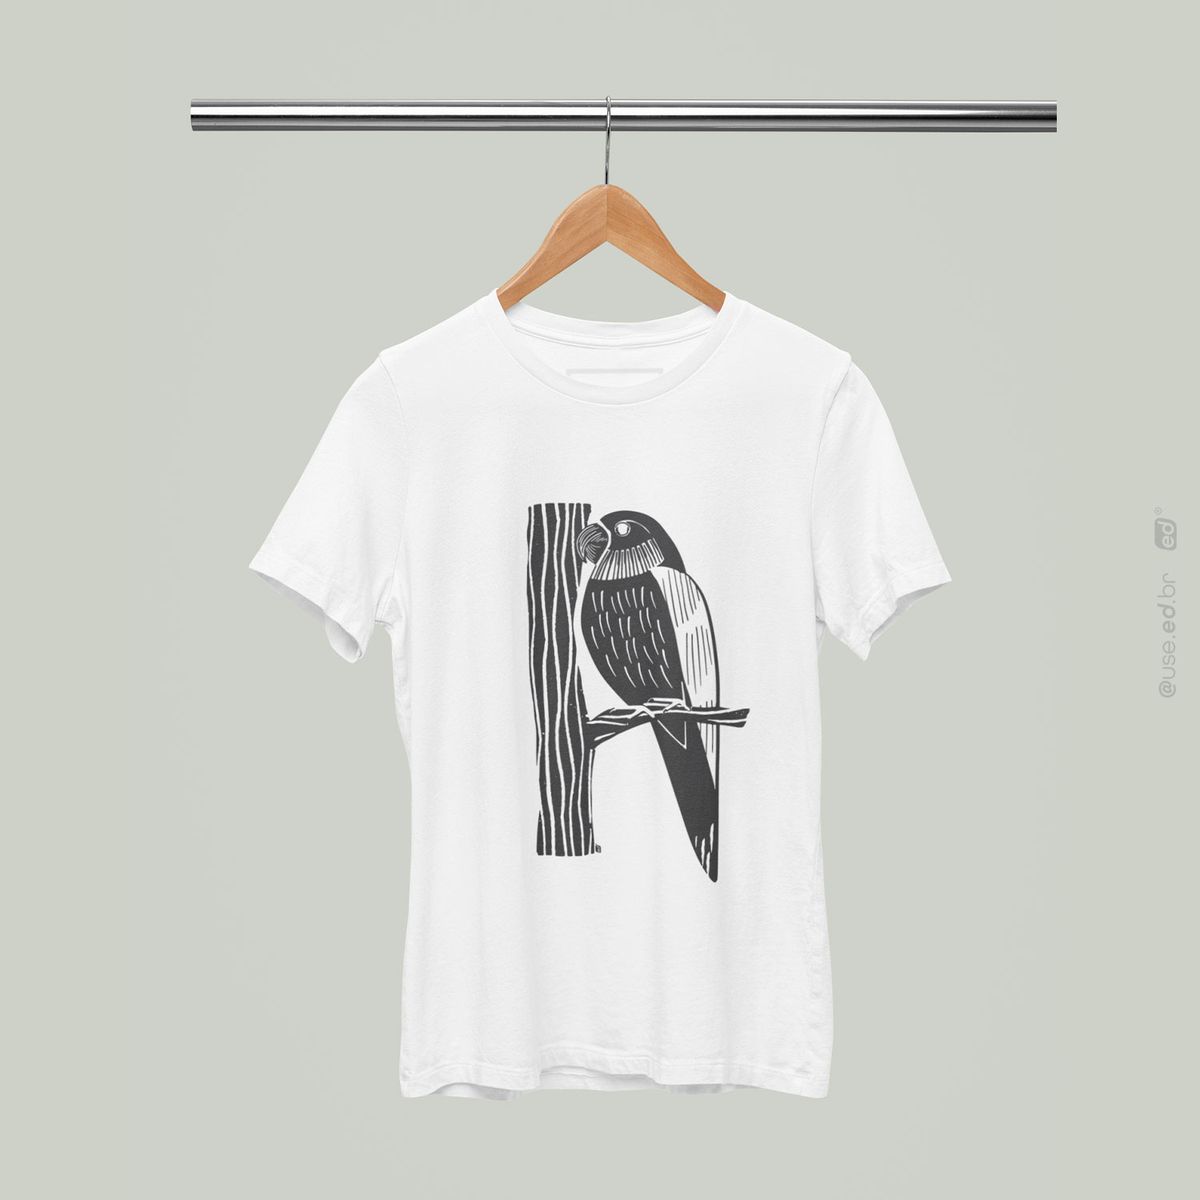 Nome do produto: Pássaro Xilogravura - Camiseta Branca Estampa Pássaro Xilogravura